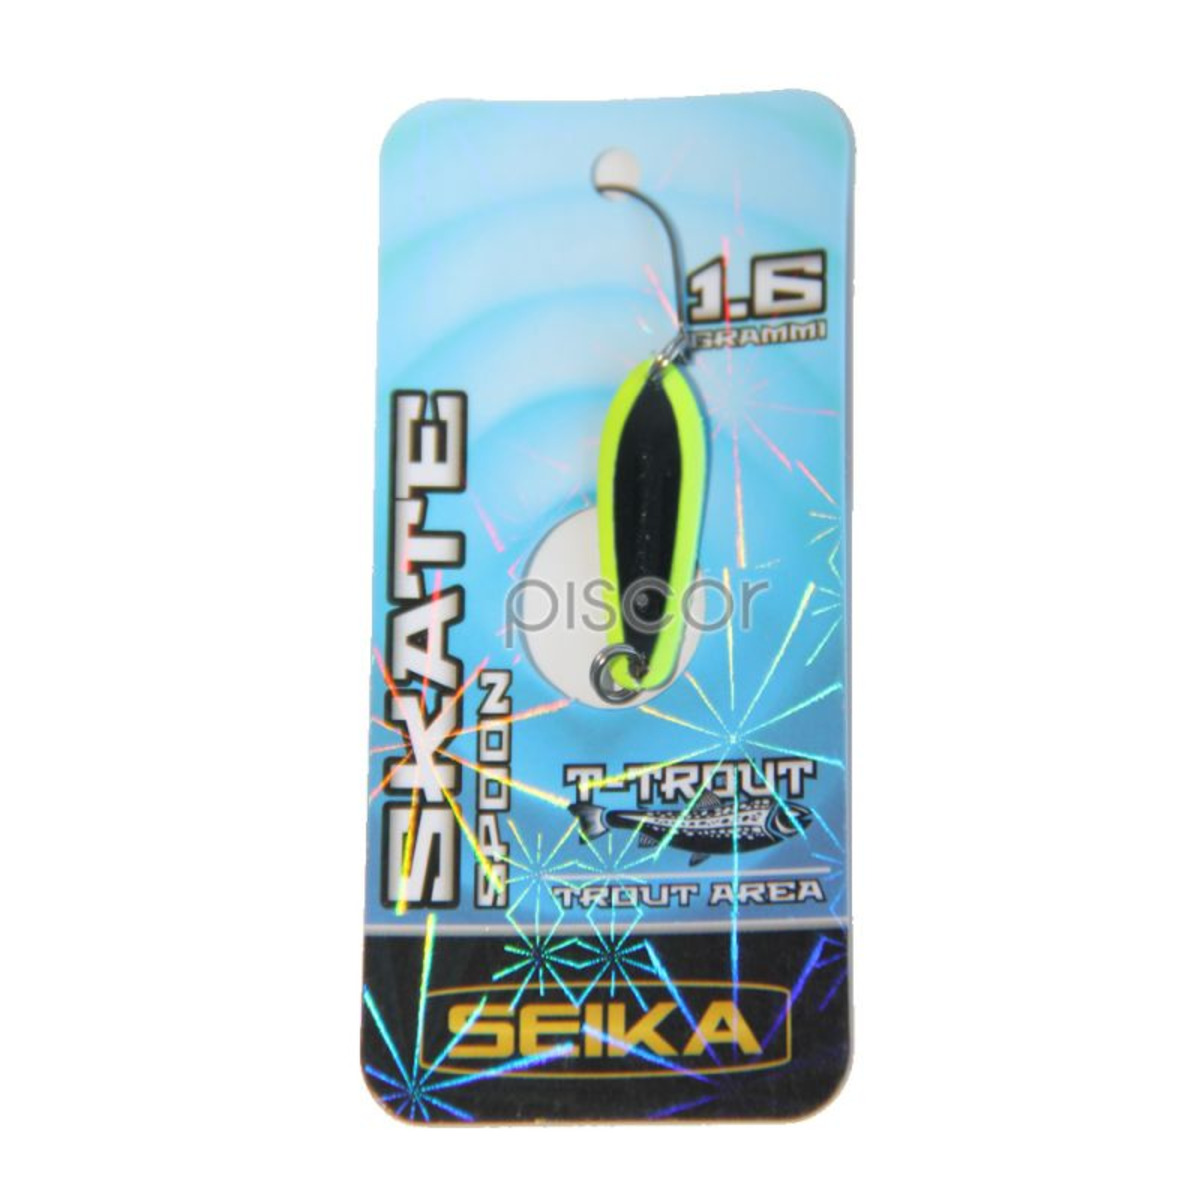 Seika Skate Spoon - 25 mm - 1.6 g - Glitter Black Fluo Yellow